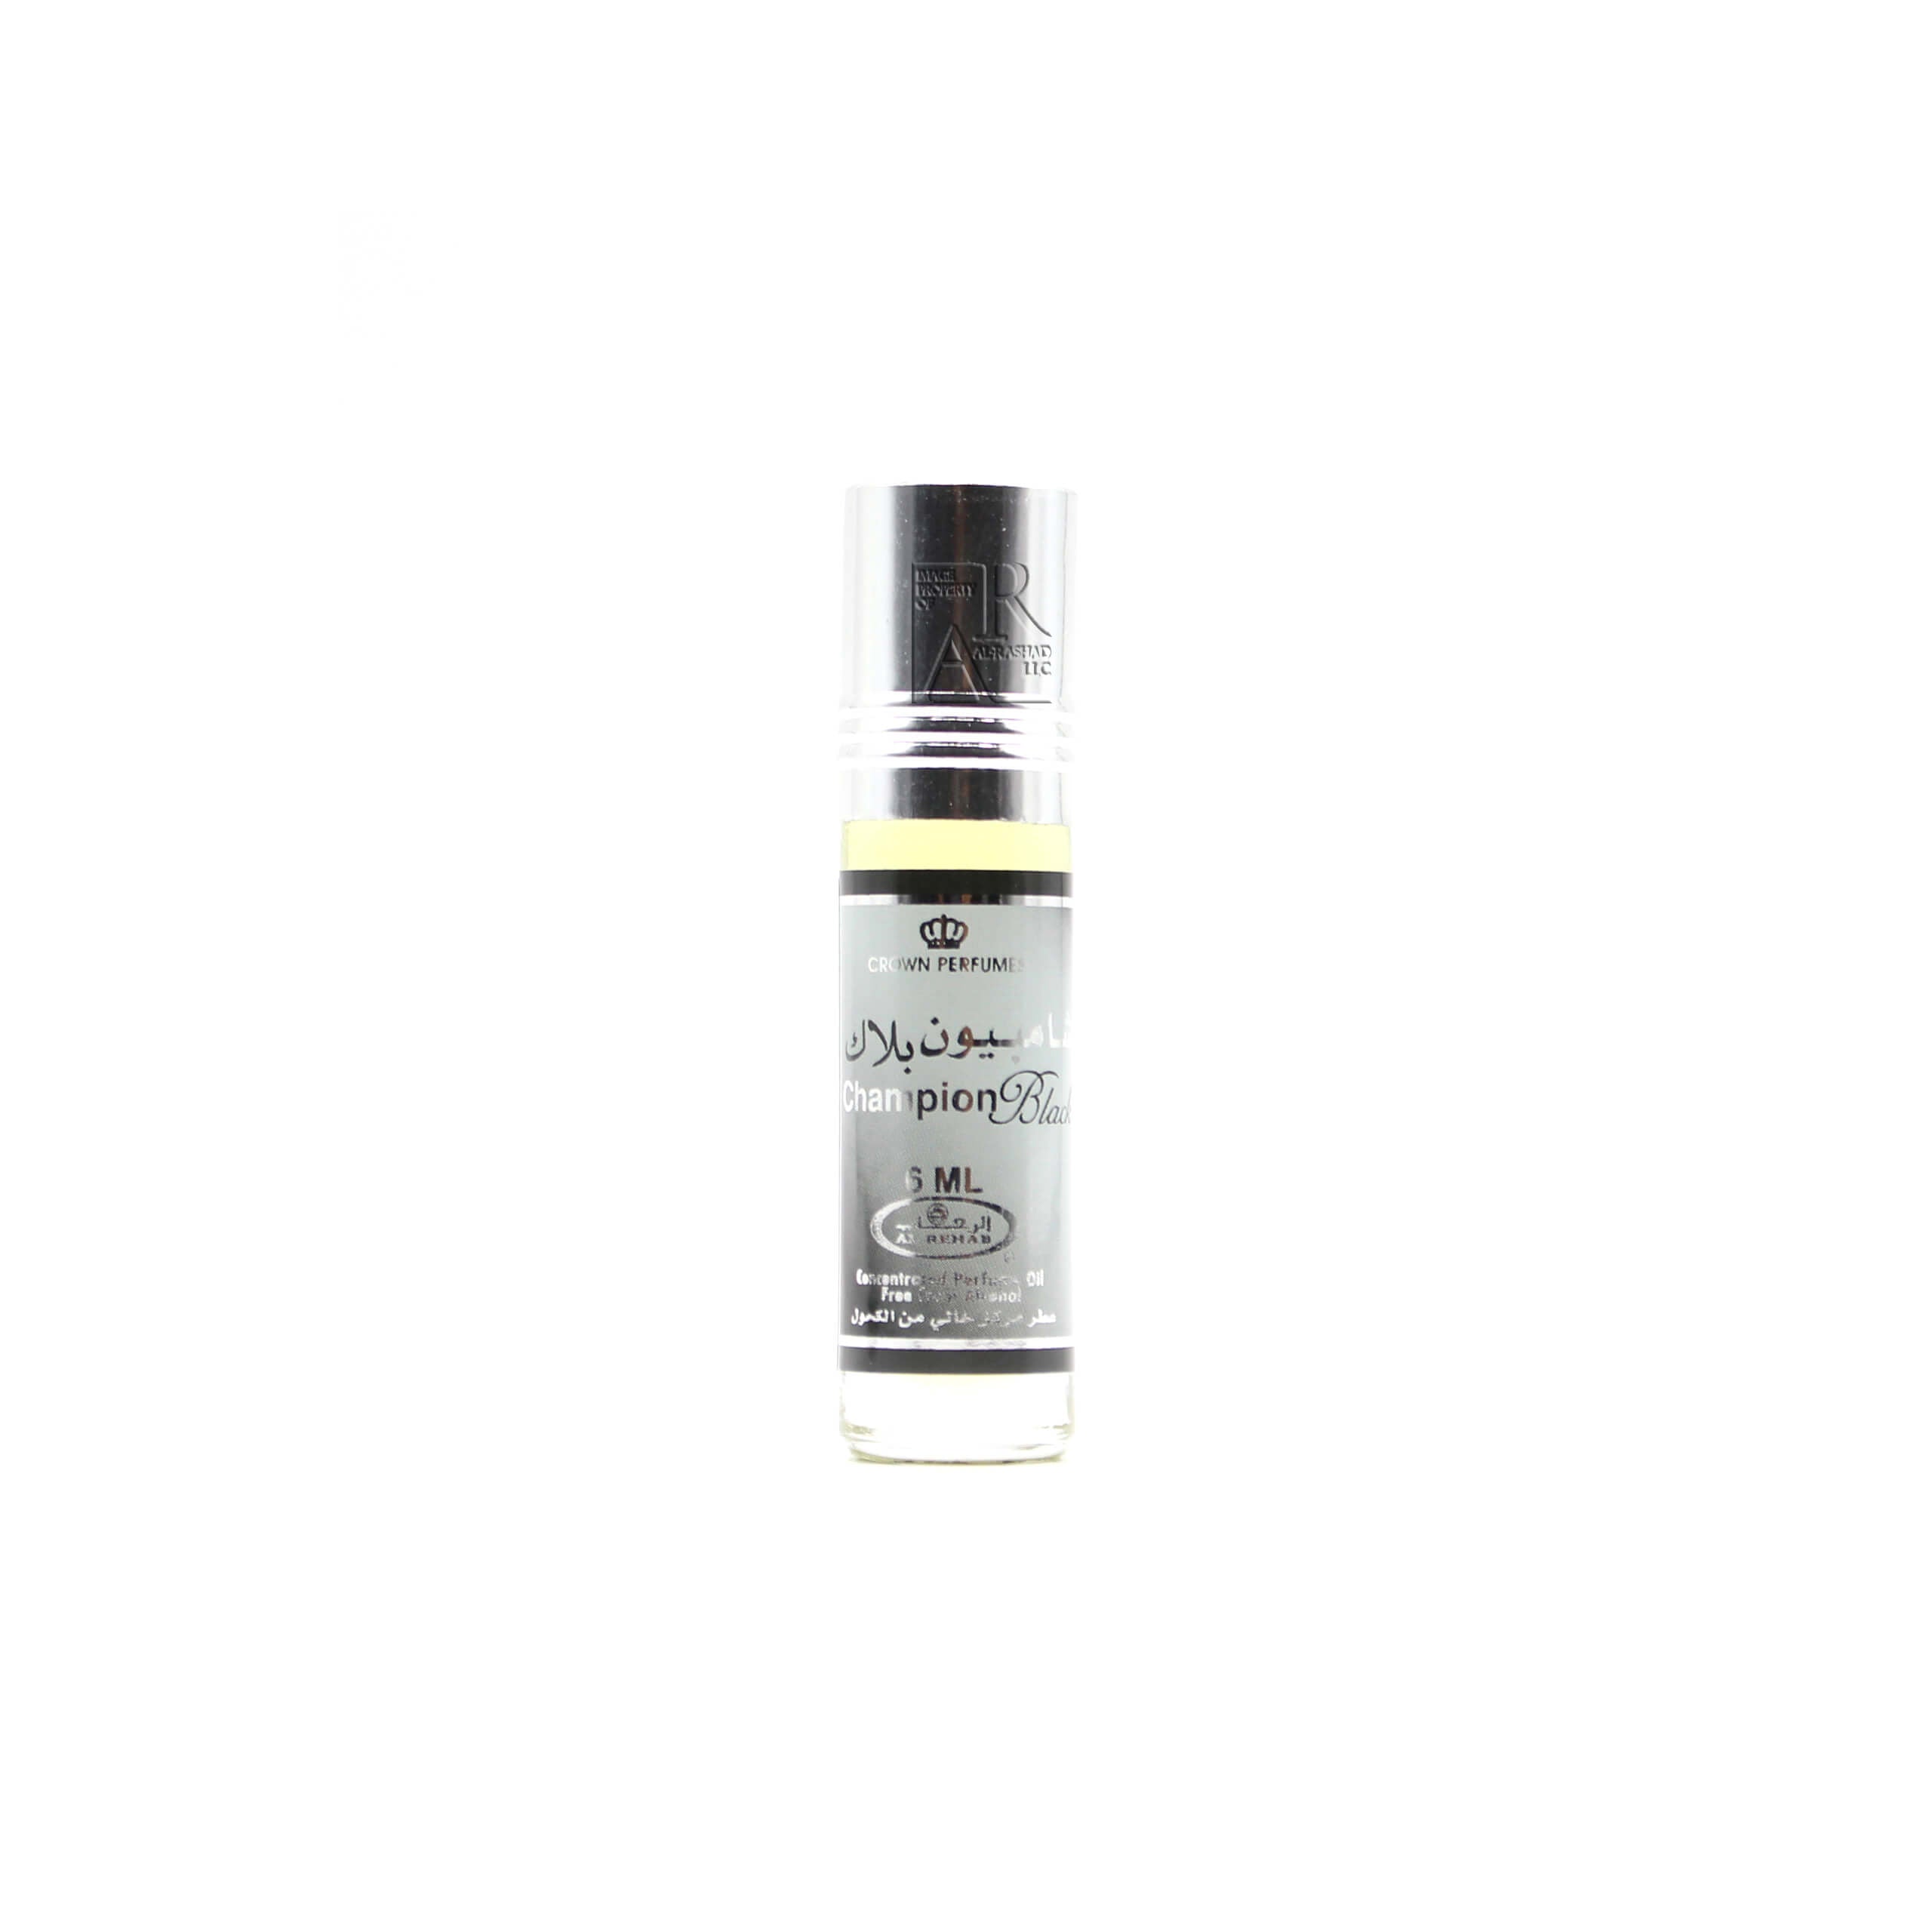 Champion Black-6ml (.2oz) Roll-on Perfume Oil by Al-Rehab (Box of 6) - Intense Oud